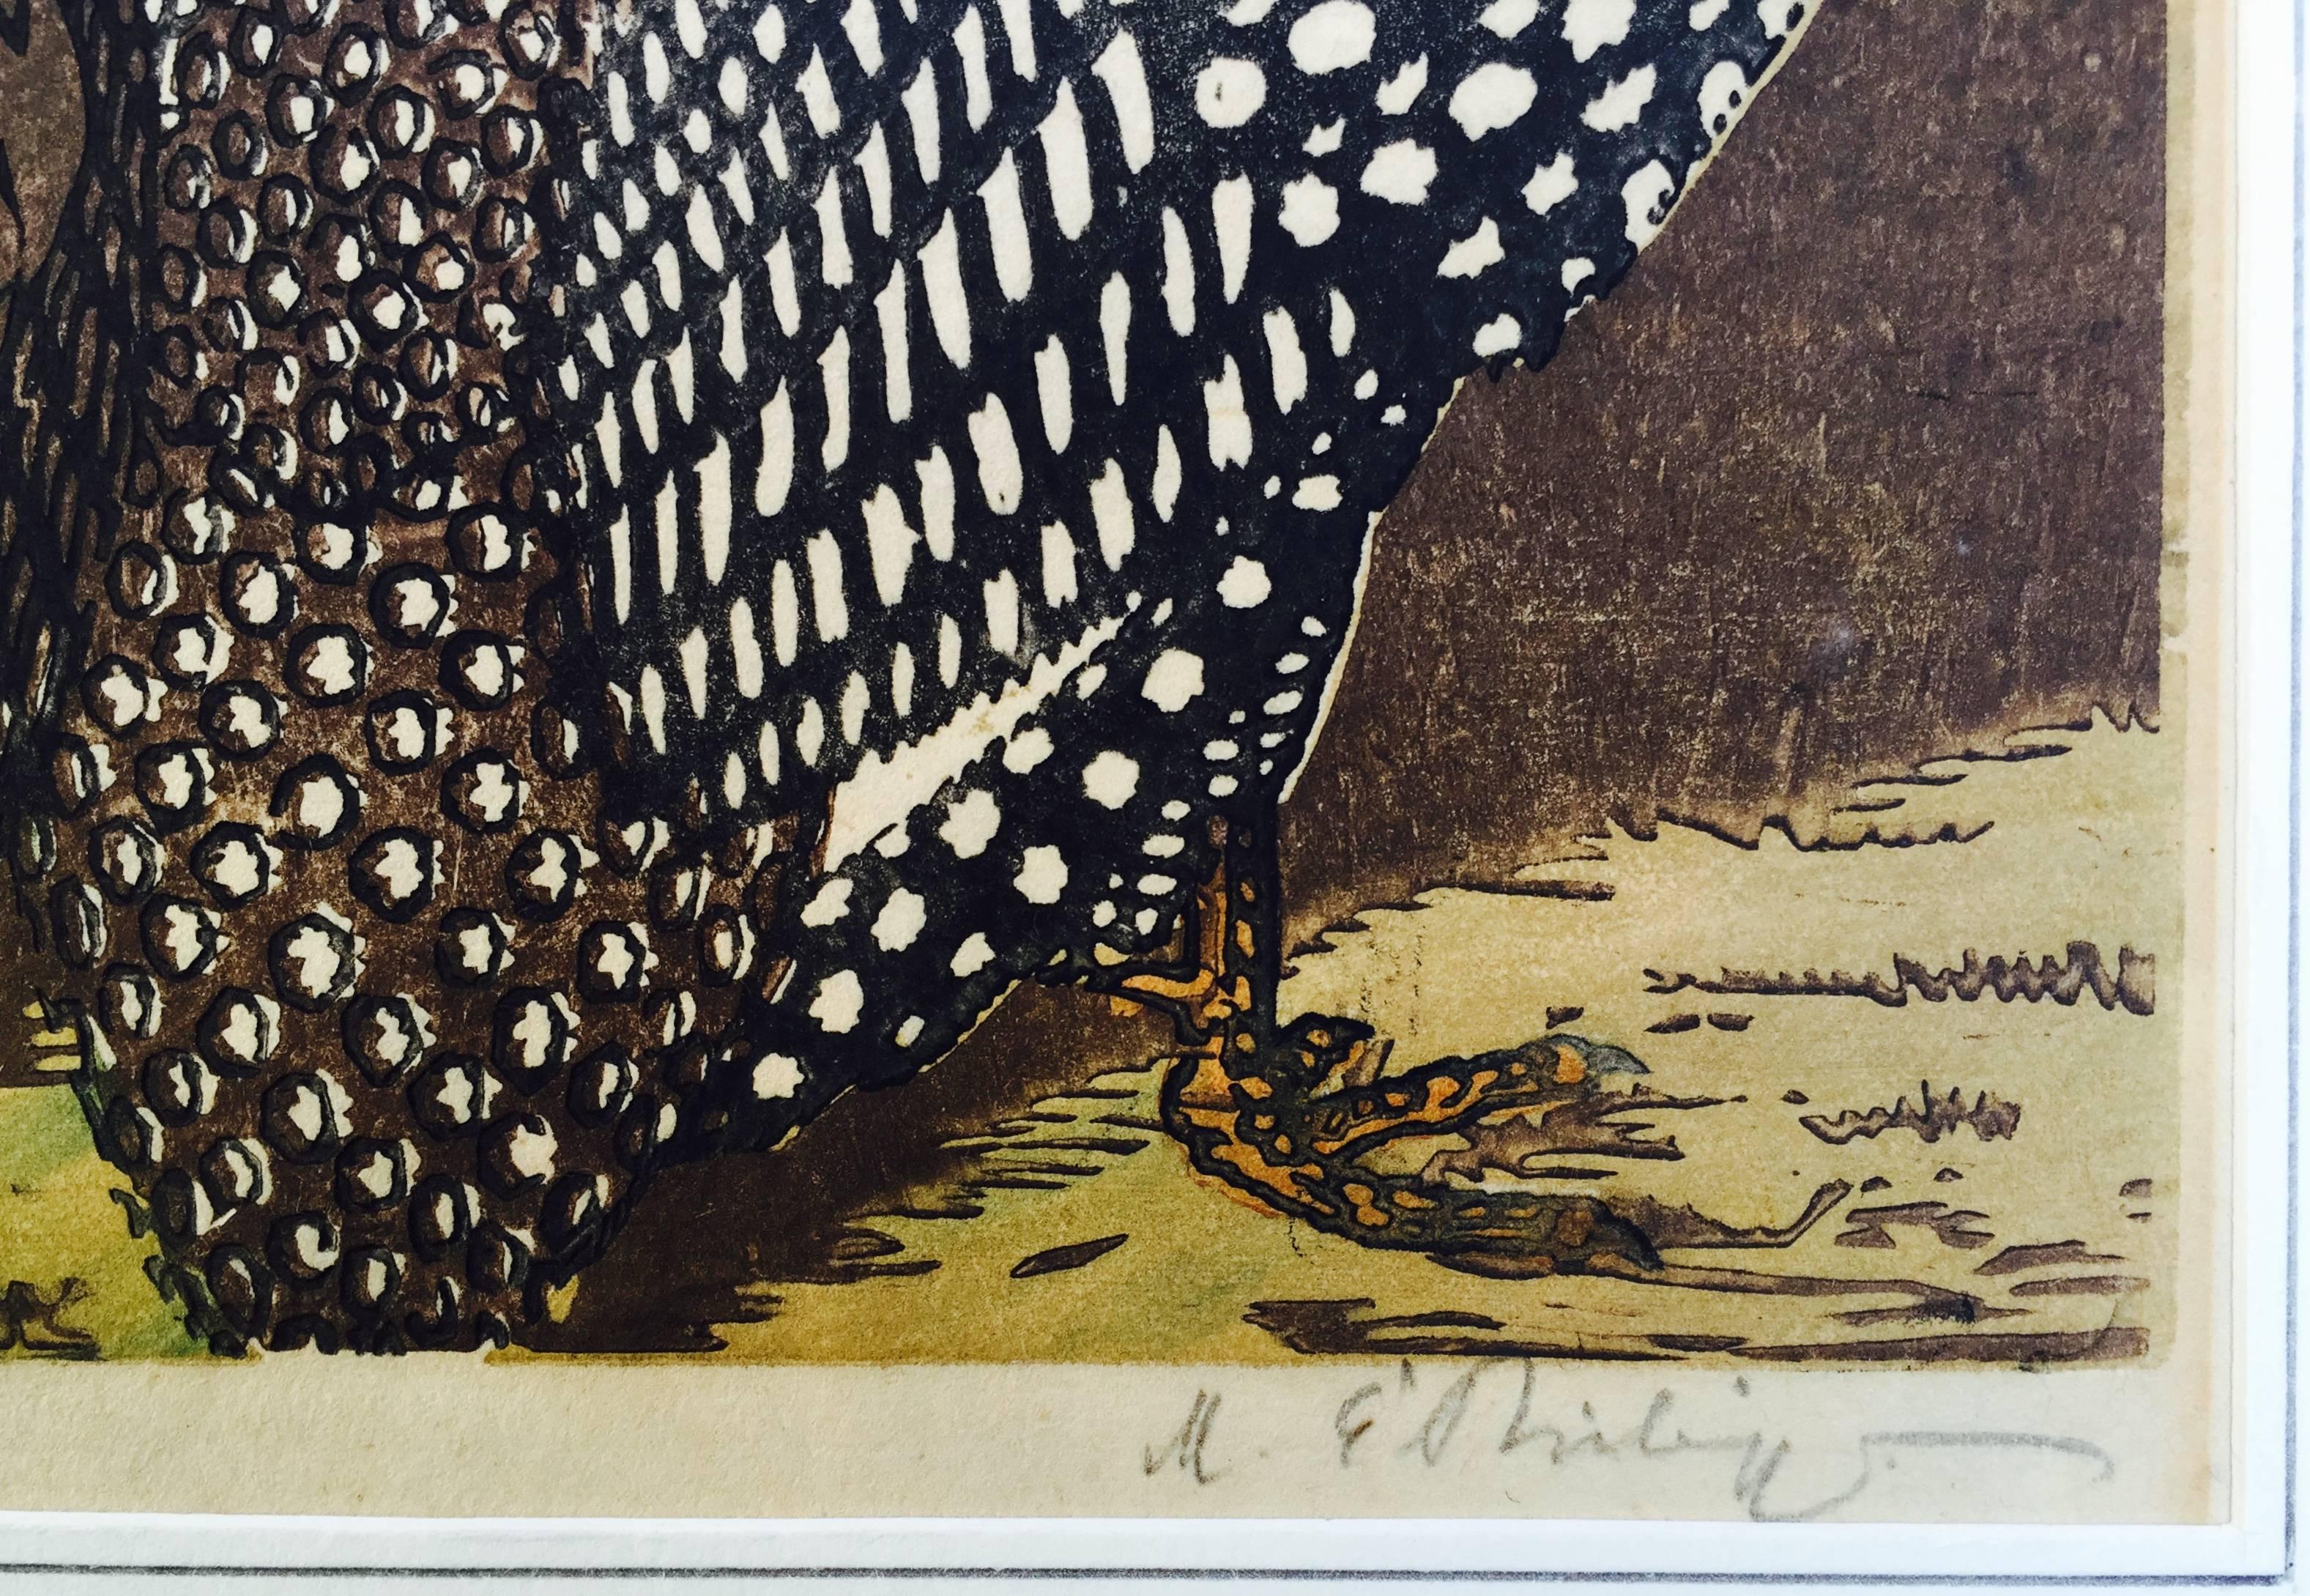 Guinea Hens - Print by Martin E. Philipp